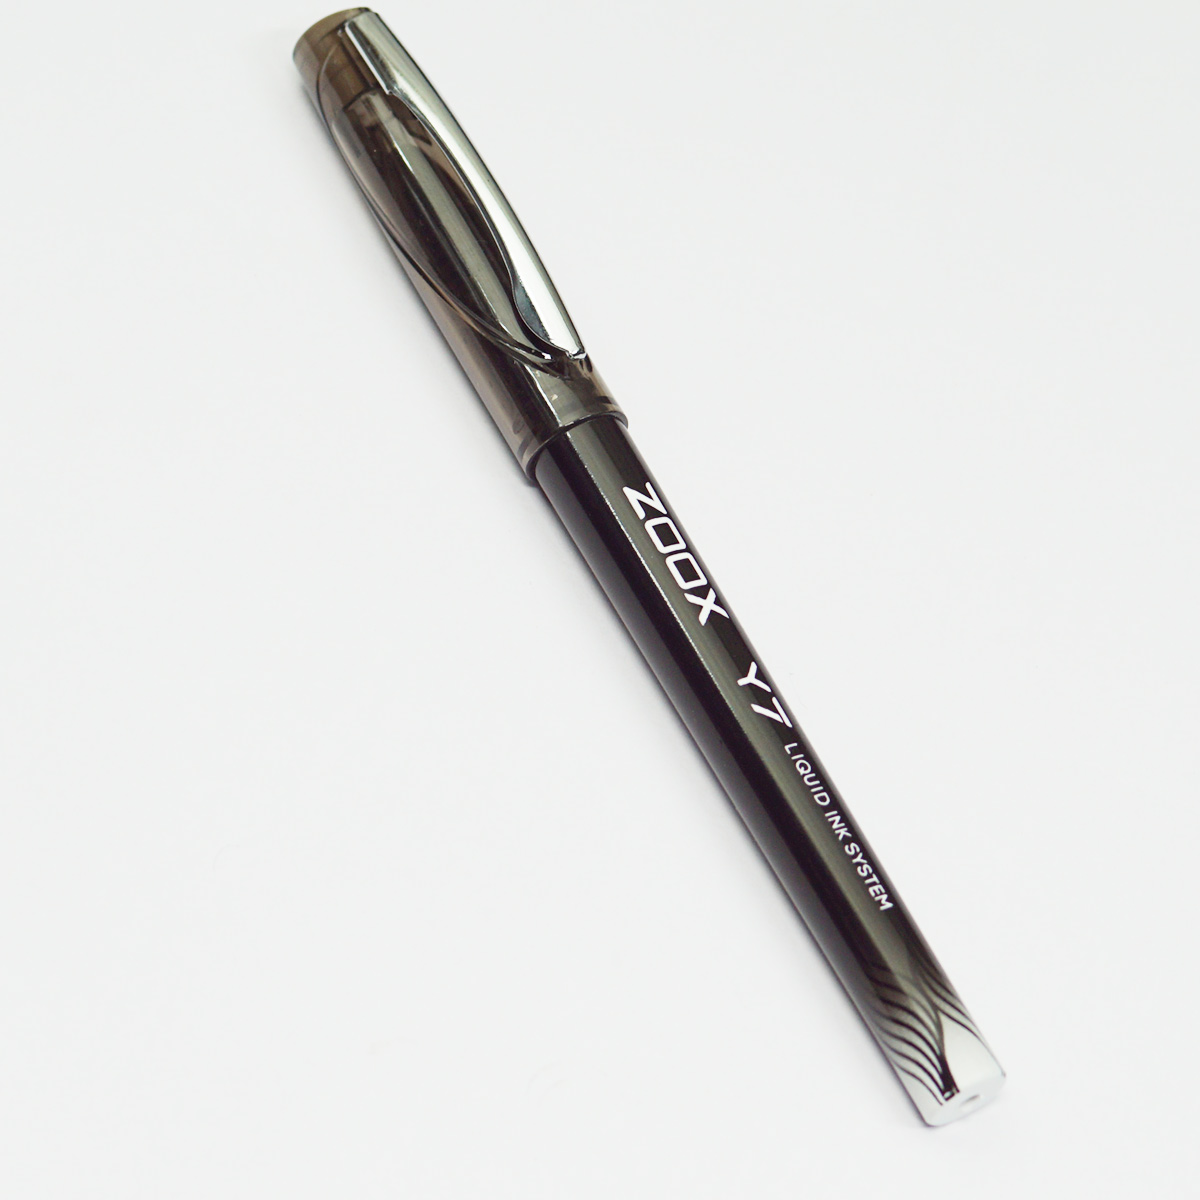 Zoox Y7 Black Color Body With Transparent Cap Medium Tip Black Writing Cap Type Ball Pen SKU 23059